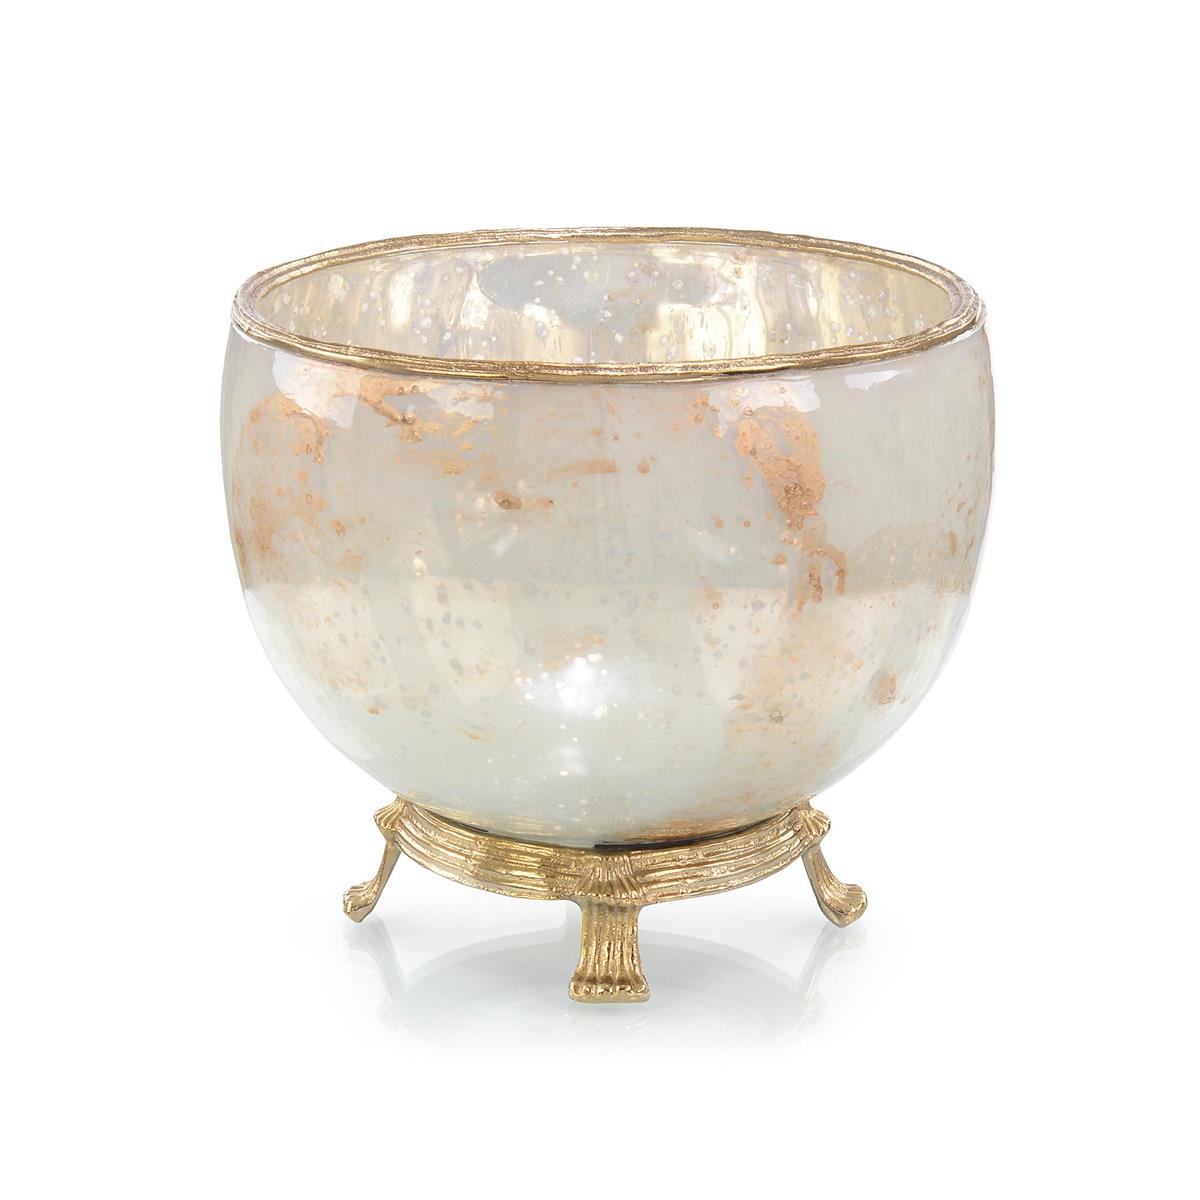 Simply Classic Pearlized Vase & Bowl-John Richard-JR-JRA-11579-DecorBowl-2-France and Son